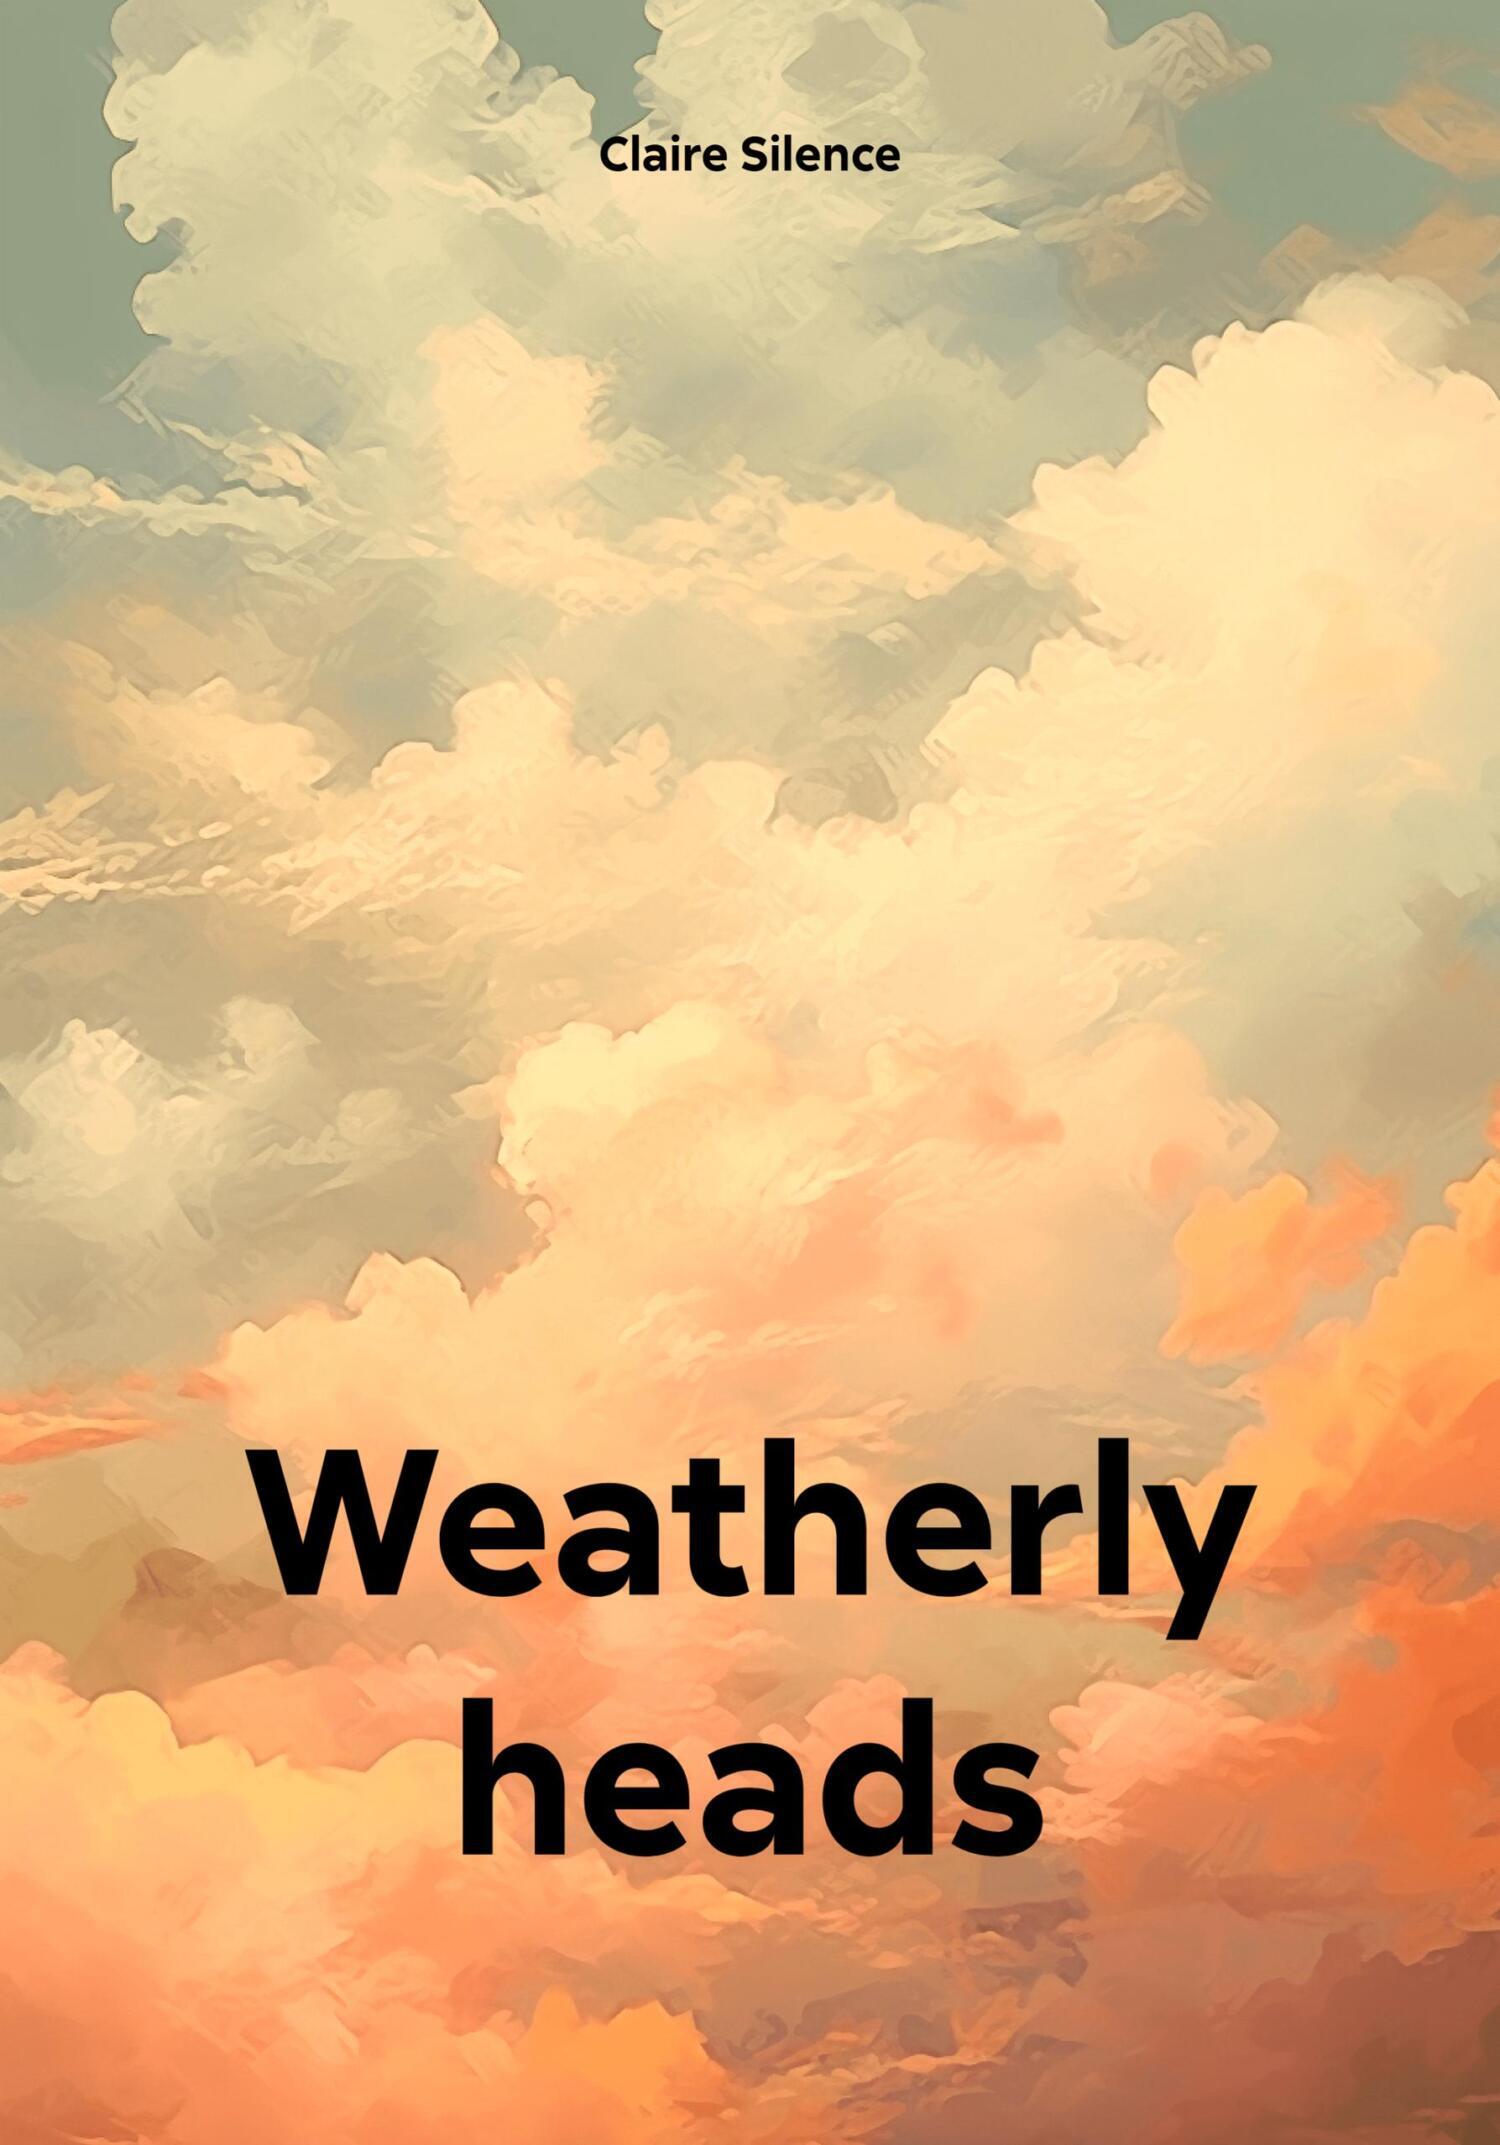 Weatherly heads